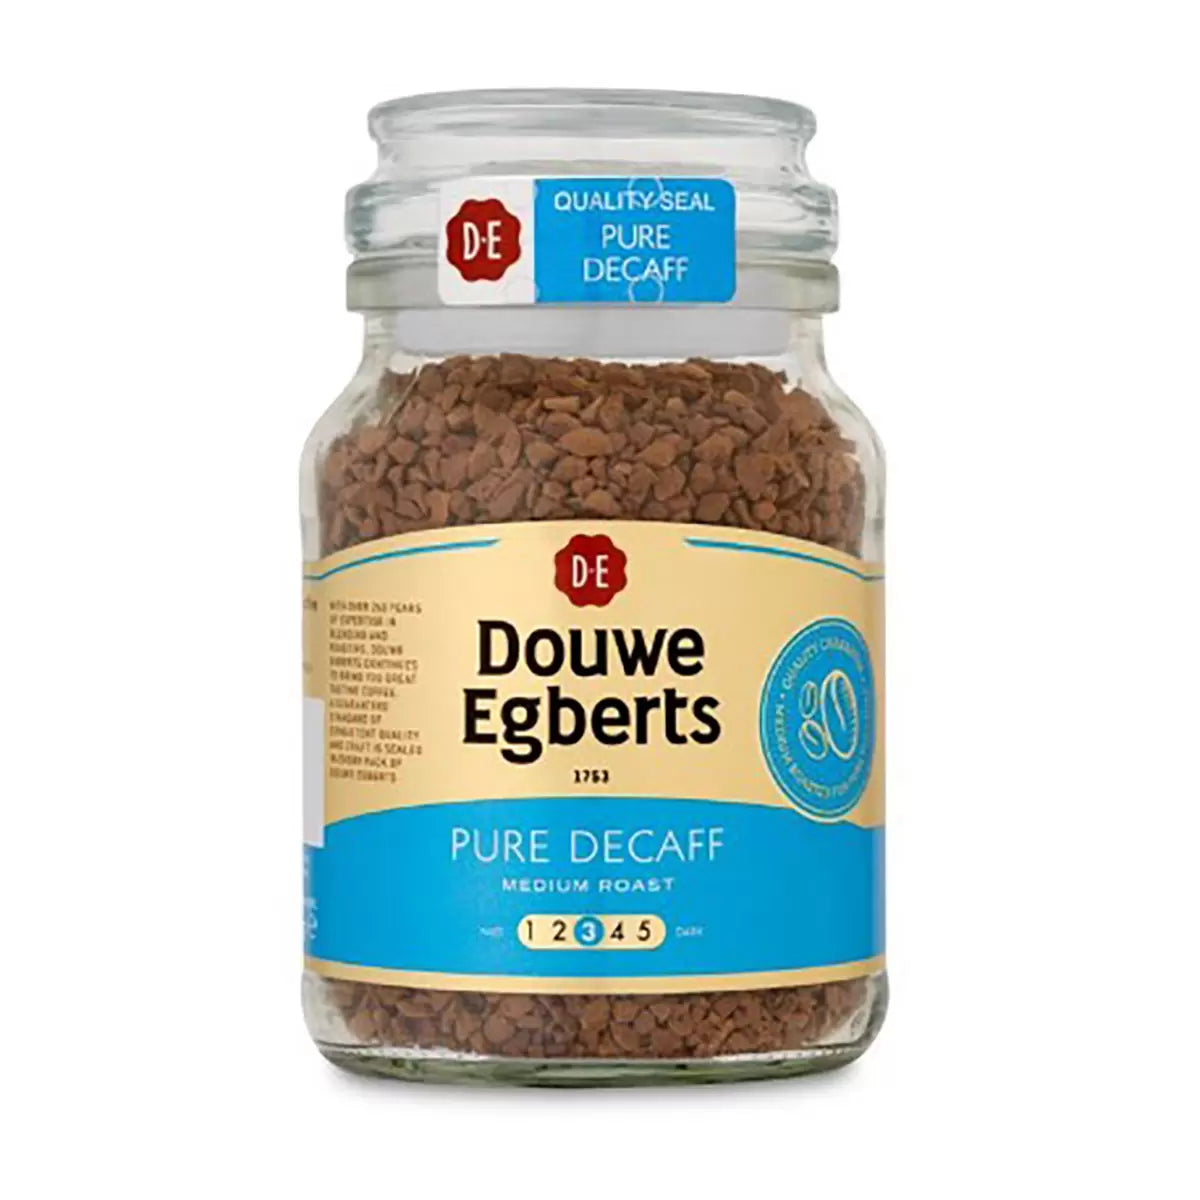 Douwe Egberts Pure Decaff Medium Roast - 400g